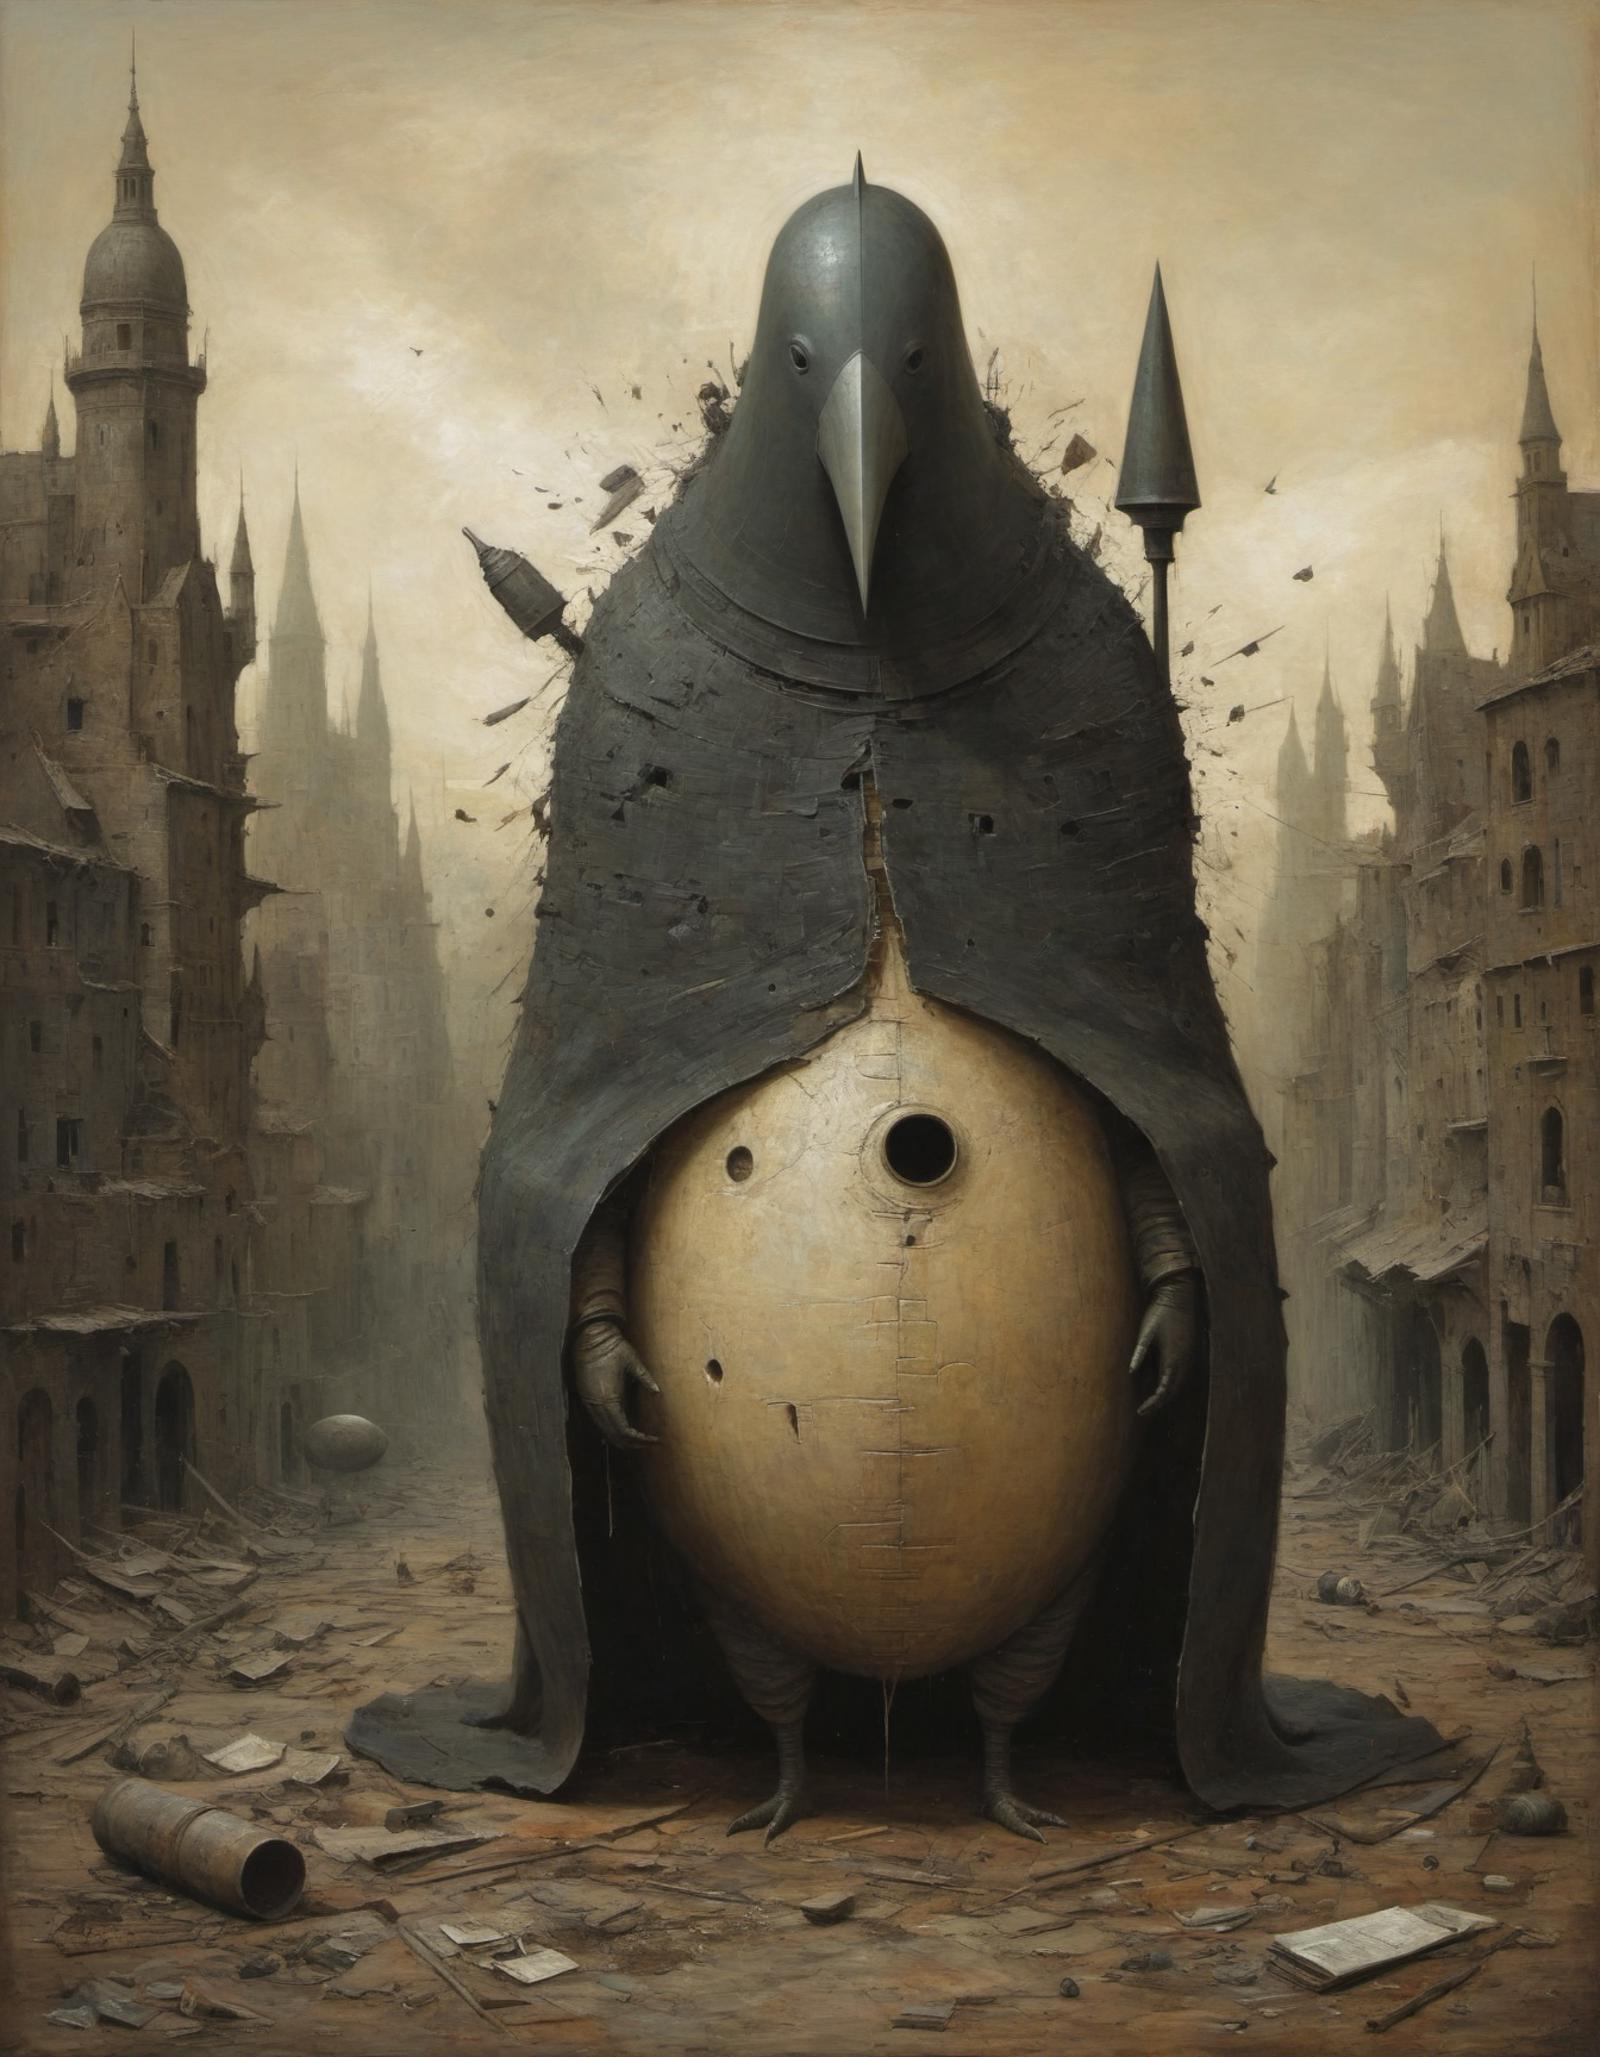 A Dark Fantasy Artwork of a Bird-like Figure with an Egg and Sword